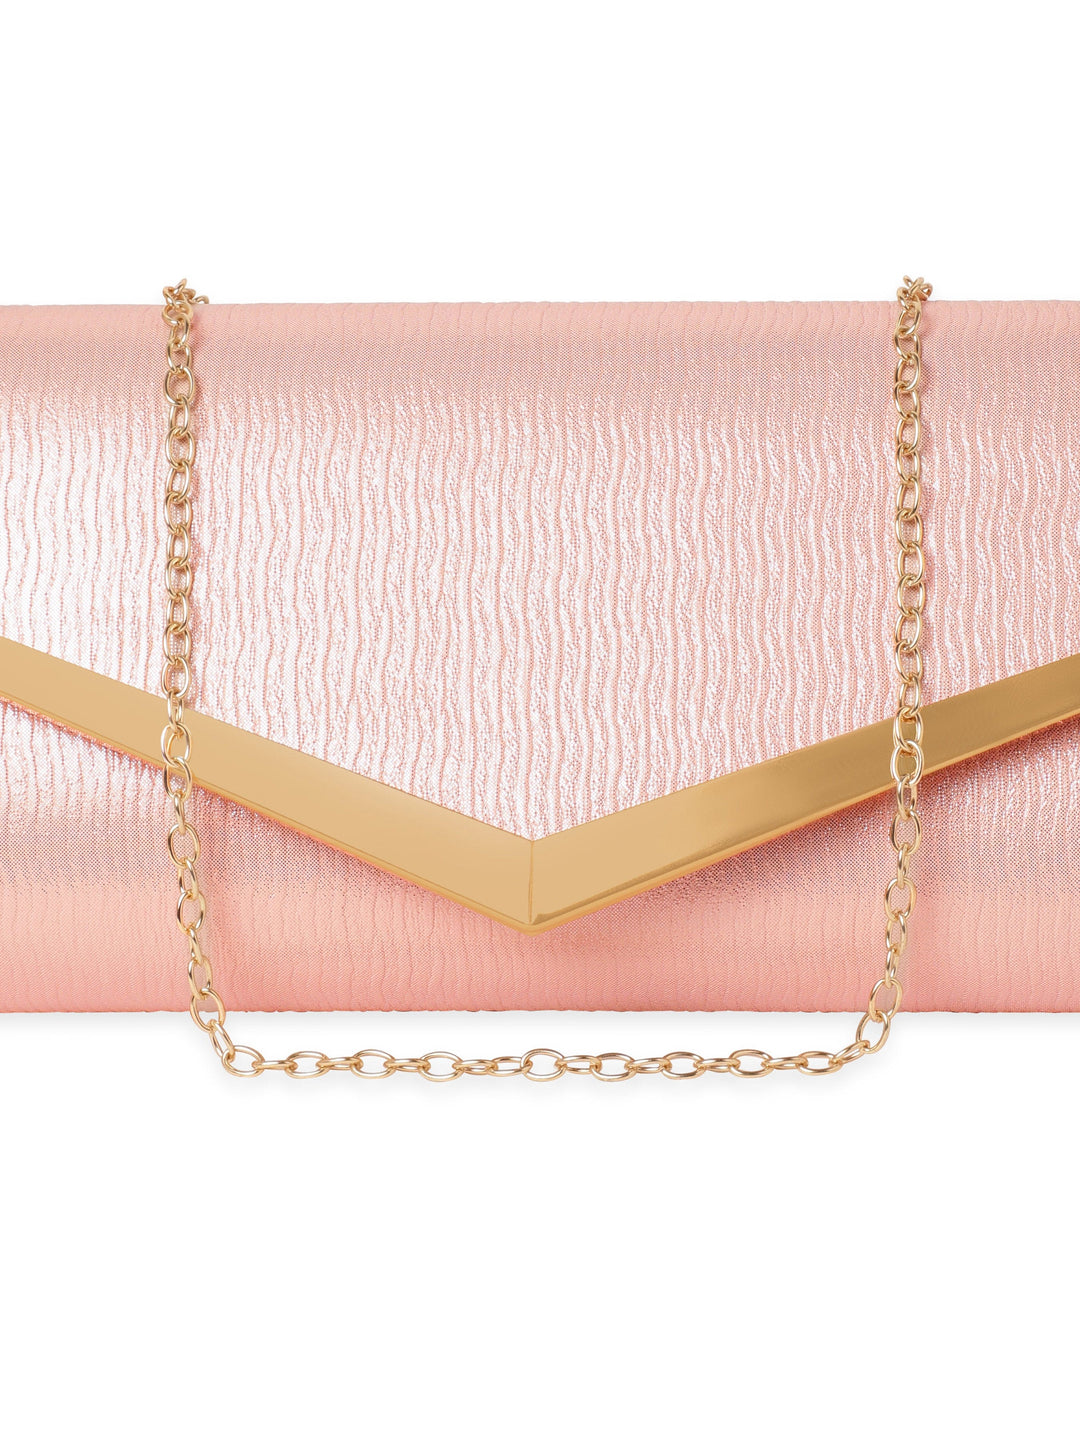 Rubans Elegance in Peach Handcrafted Peach Clutch Bag Handbag, Wallet Accessories & Clutches